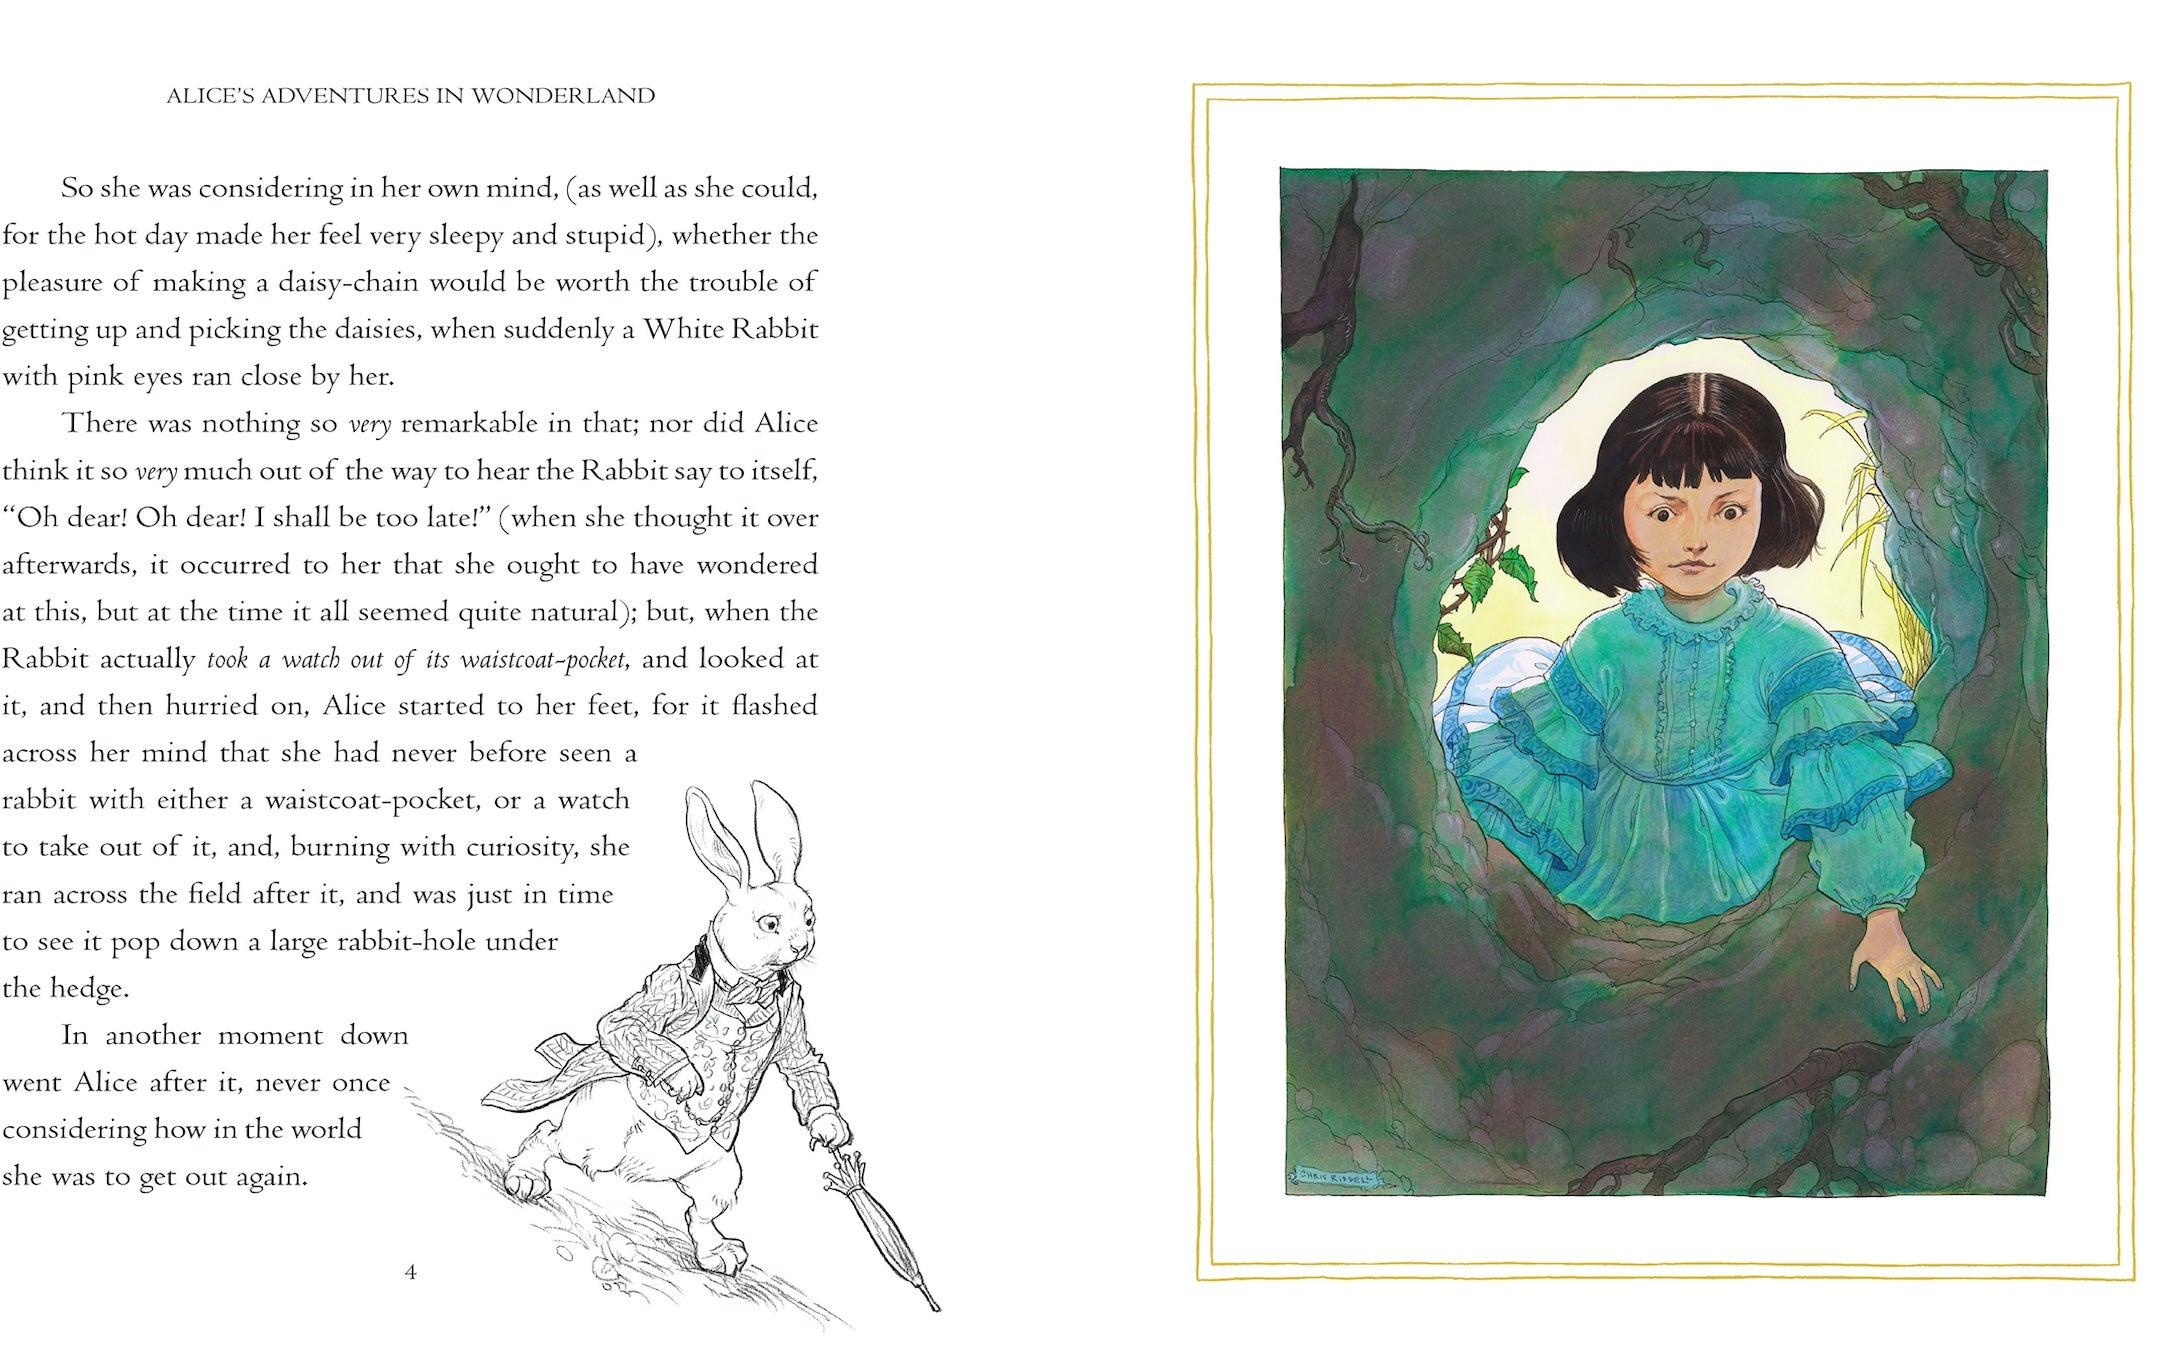 Alice’s adventures in wonderland (Chris Riddell's Gift ED)written by Lewis Carroll